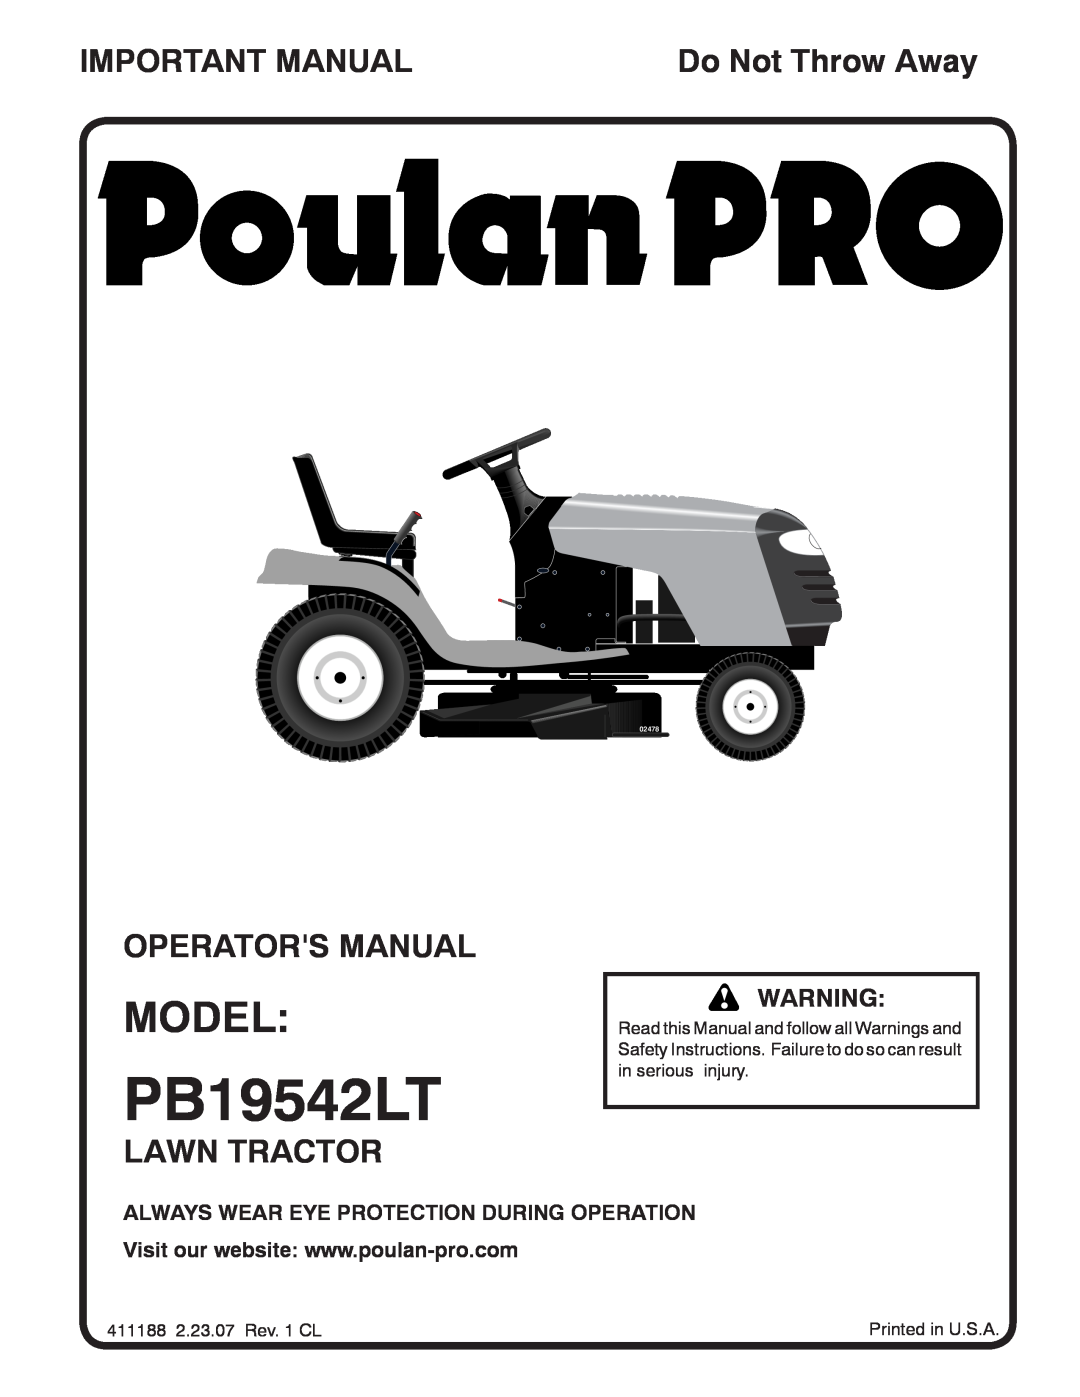 Poulan PB19542LT manual Model, Important Manual, Operators Manual, Lawn Tractor, Do Not Throw Away, 02478 